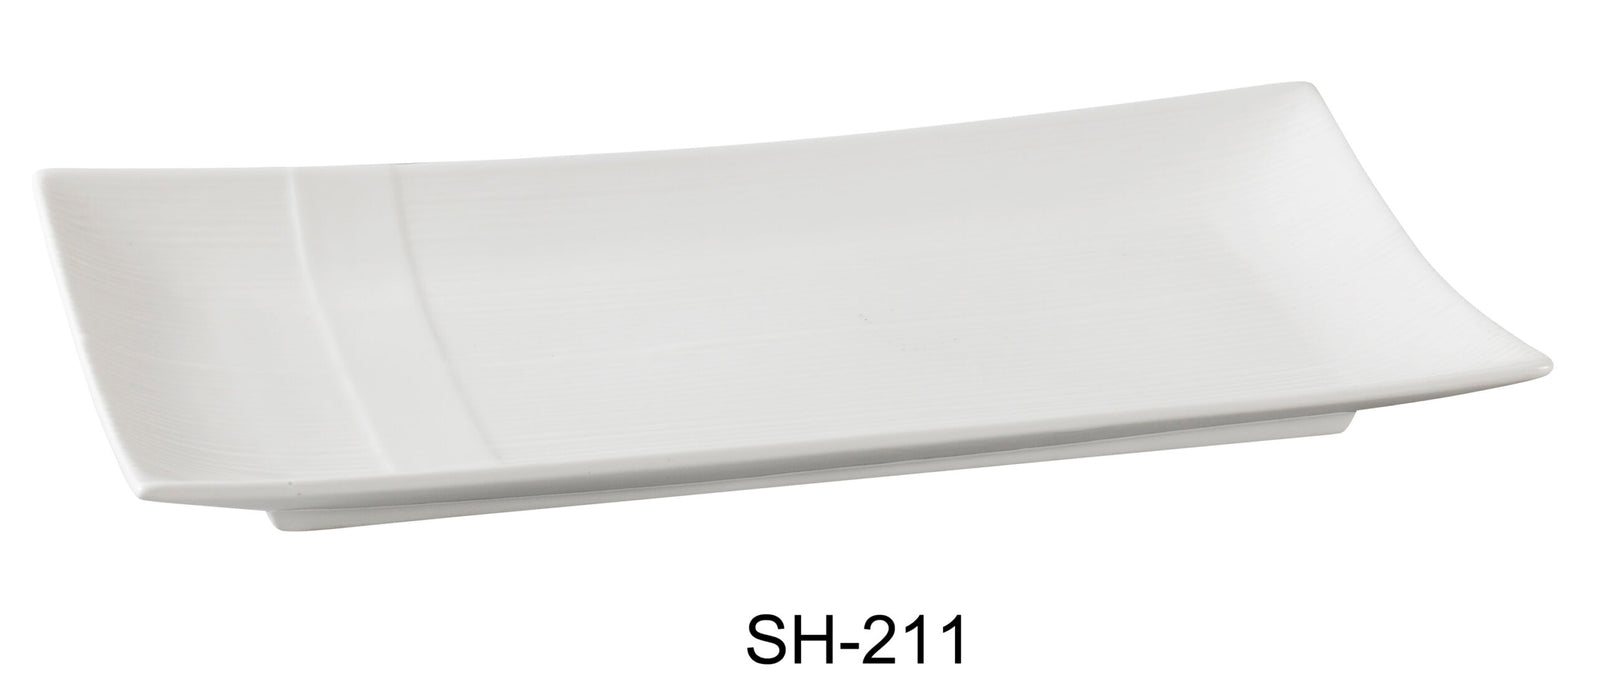 Yanco SH-211 Shanghai Rectangular Plate, 11.25″ Length x 5.5″ Width, China, Bone White (Pack of 24)